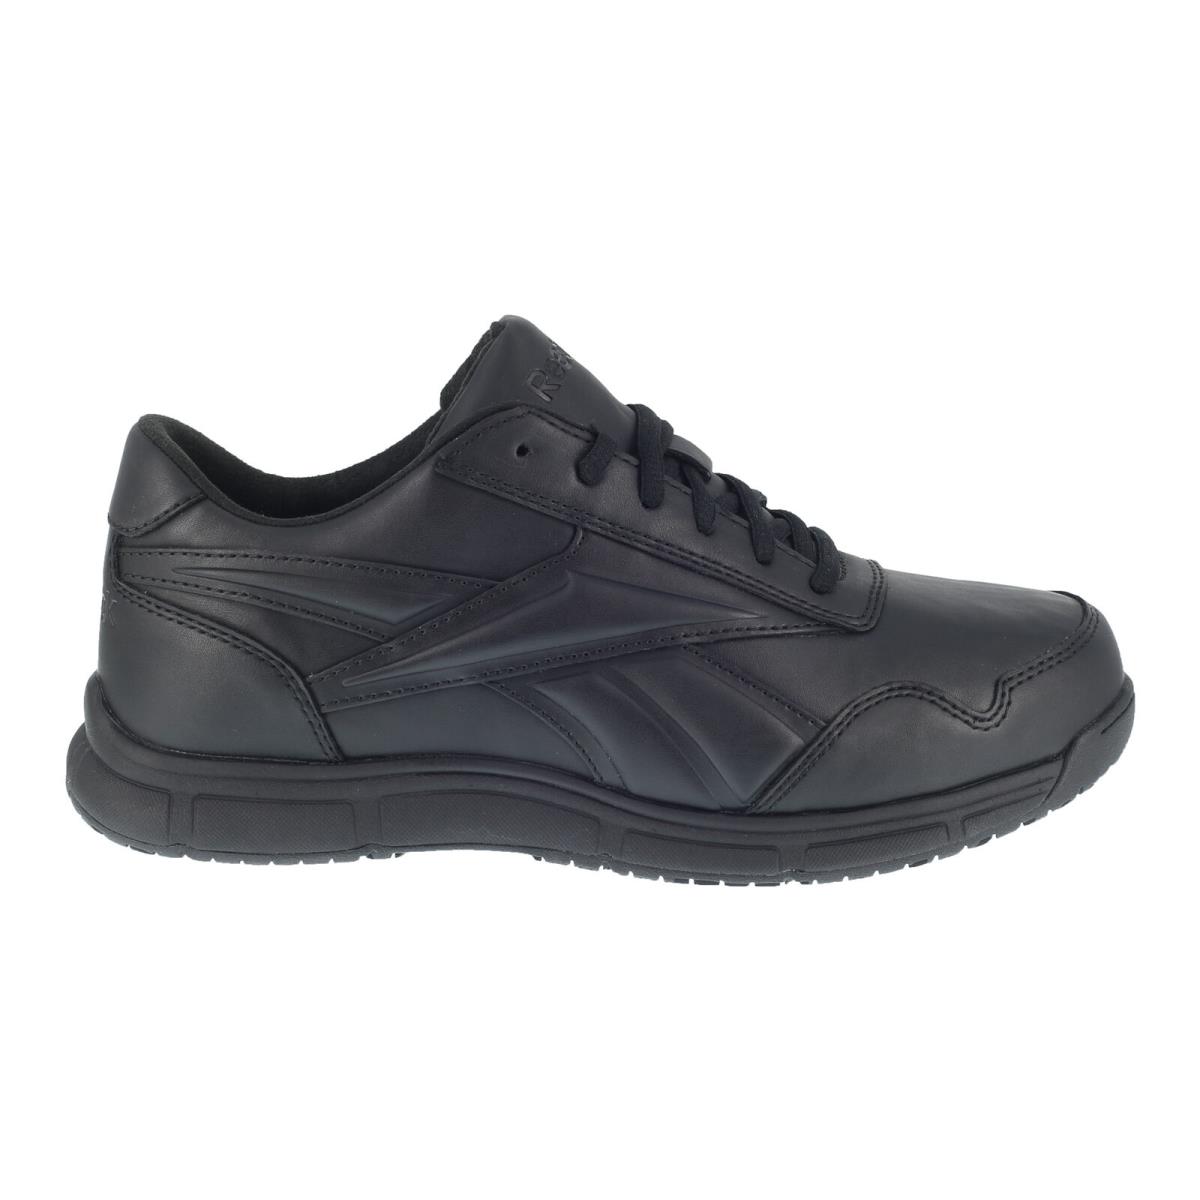 Reebok Womens Black Leather Work Shoes Jorie LT SR Oxford